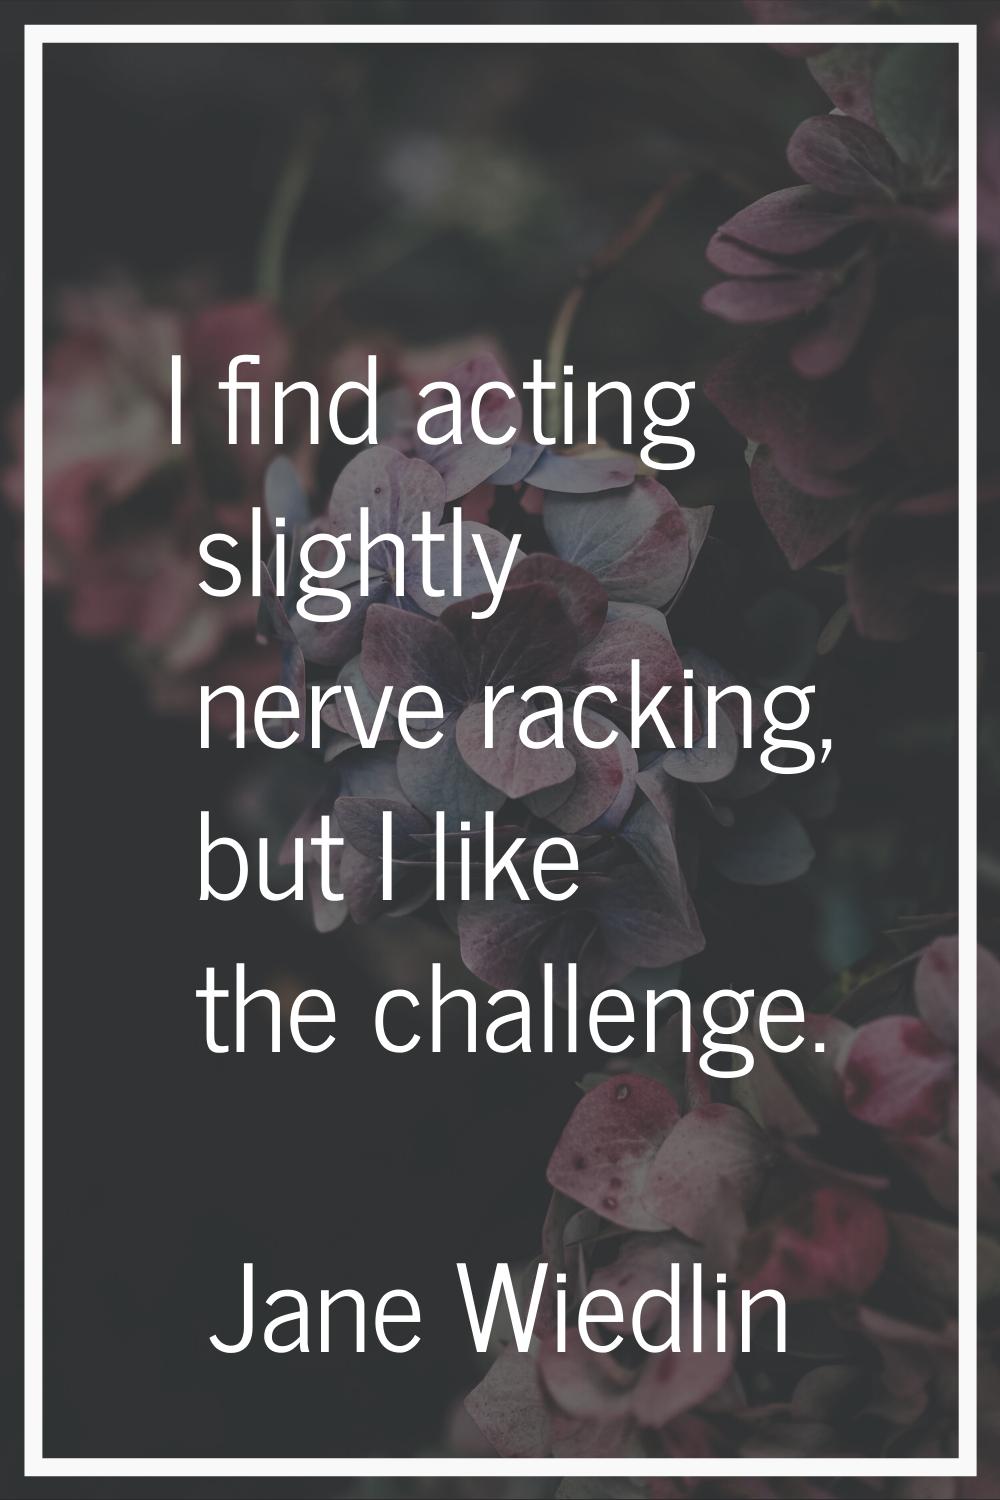 I find acting slightly nerve racking, but I like the challenge.